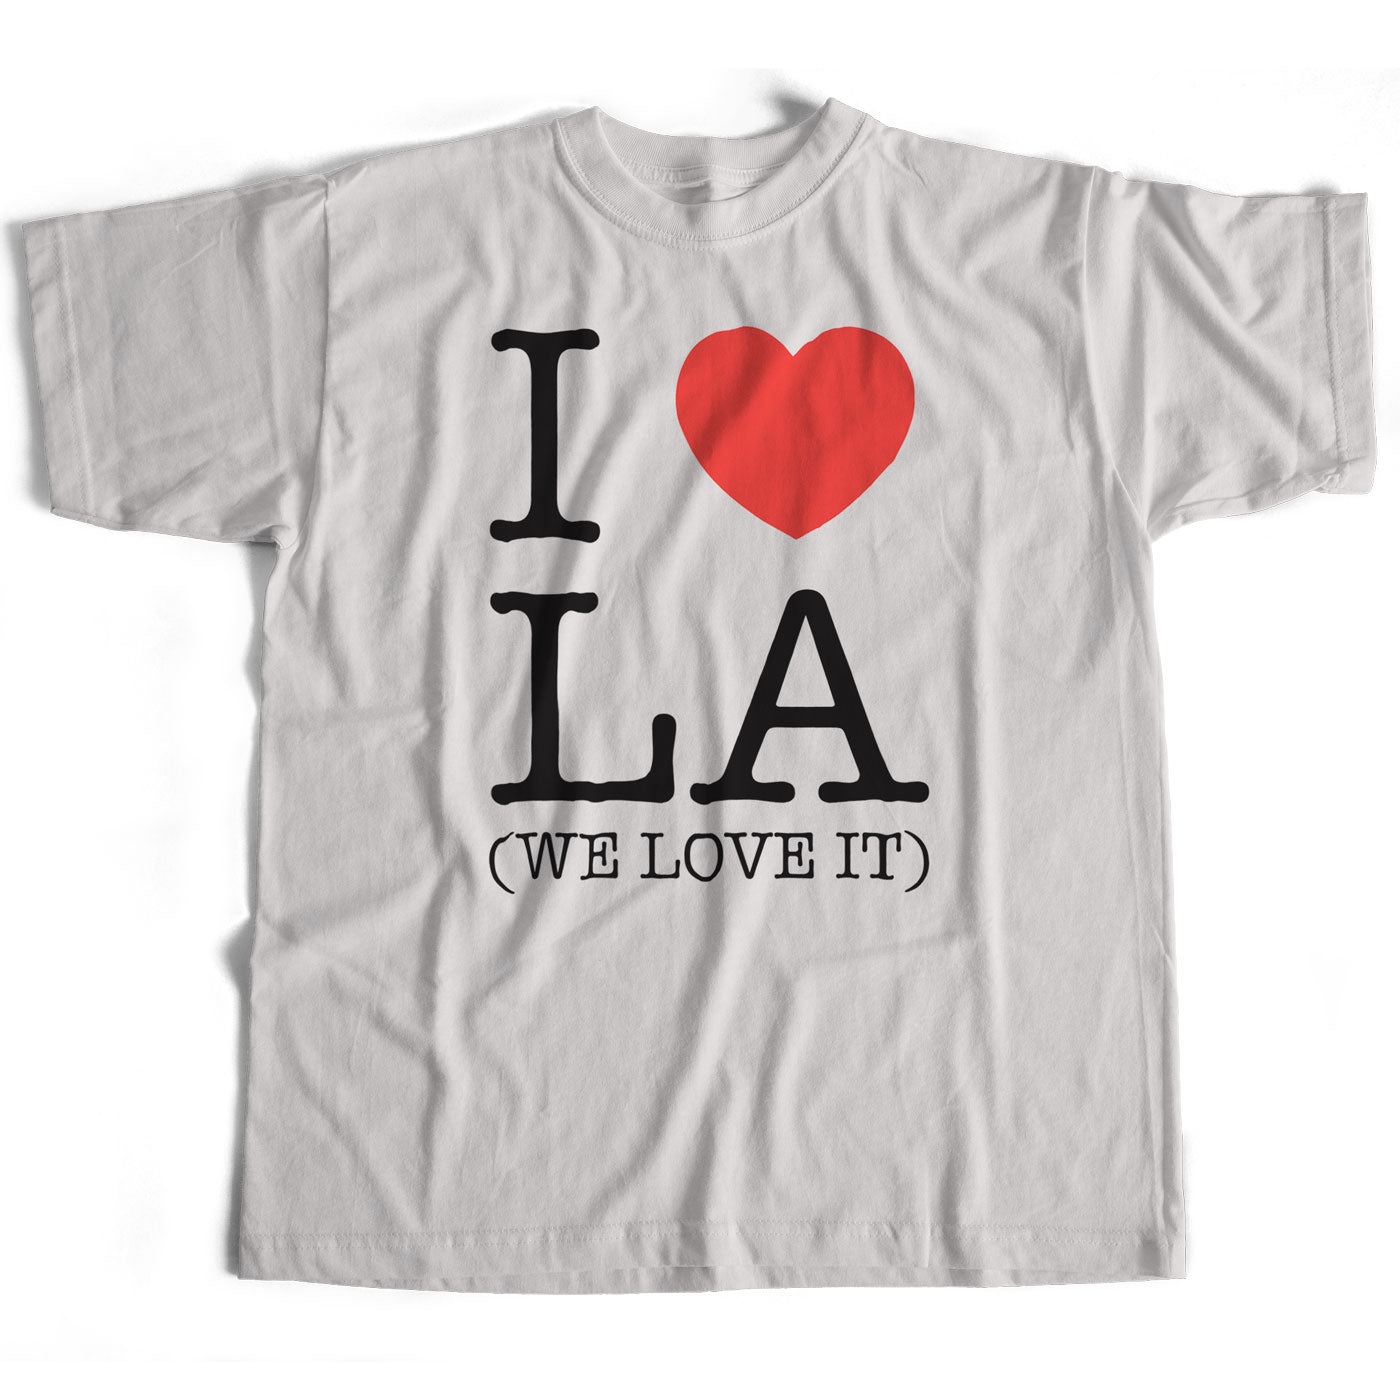 Old Skool Hooligans Inspired by Randy Newman T Shirt - I Love LA (We Love It)